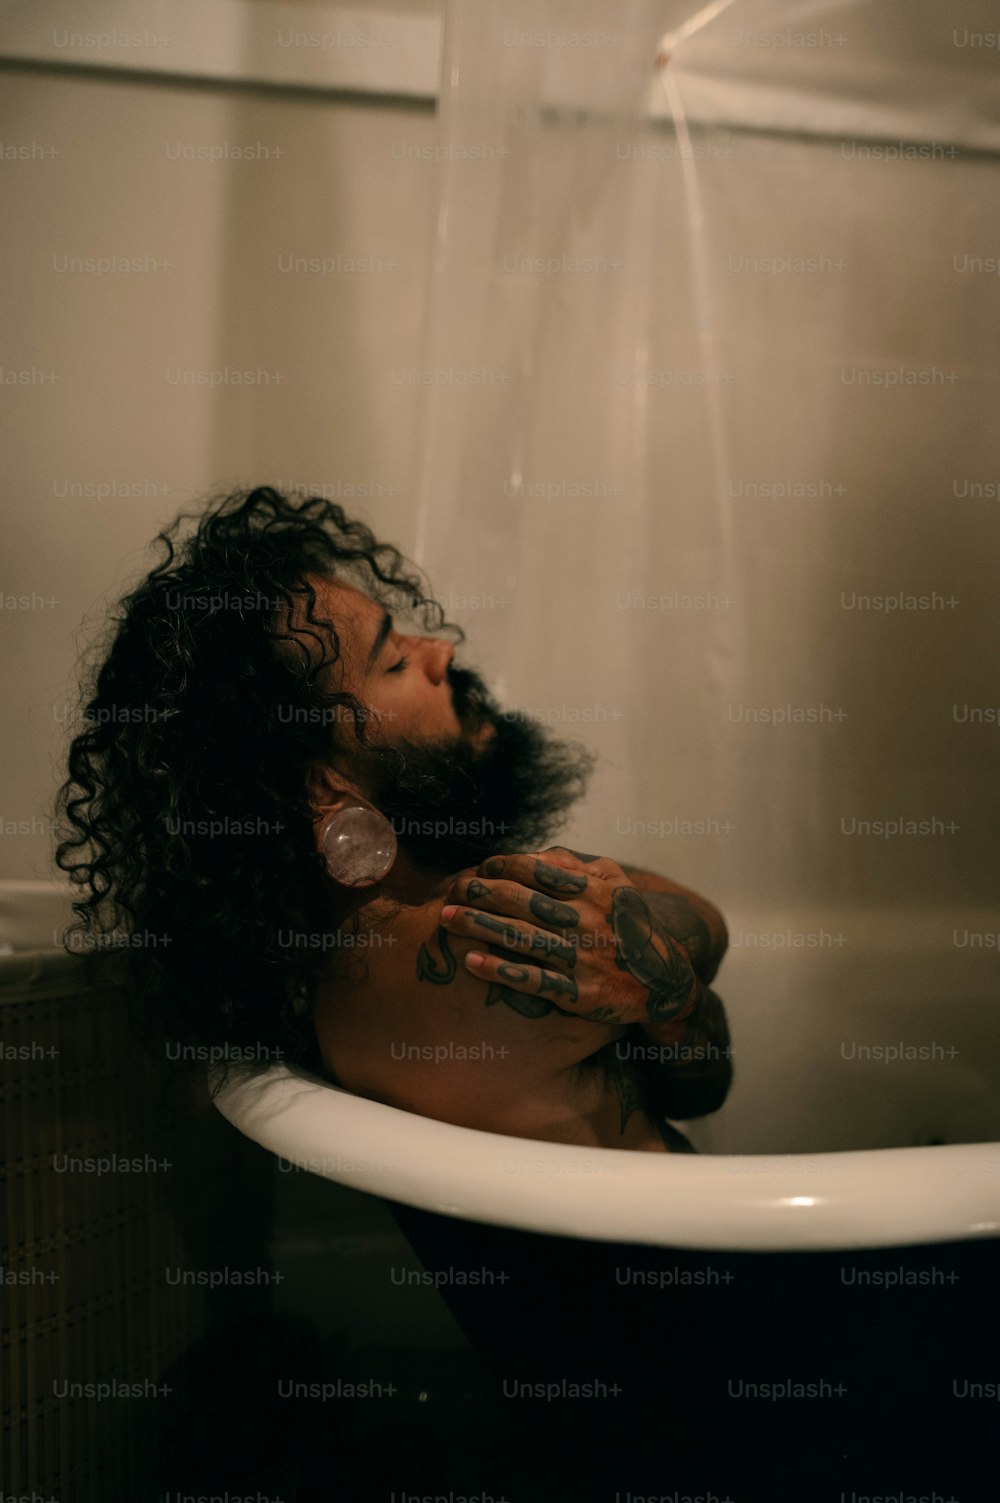 Un uomo in una vasca da bagno coperta di tatuaggi